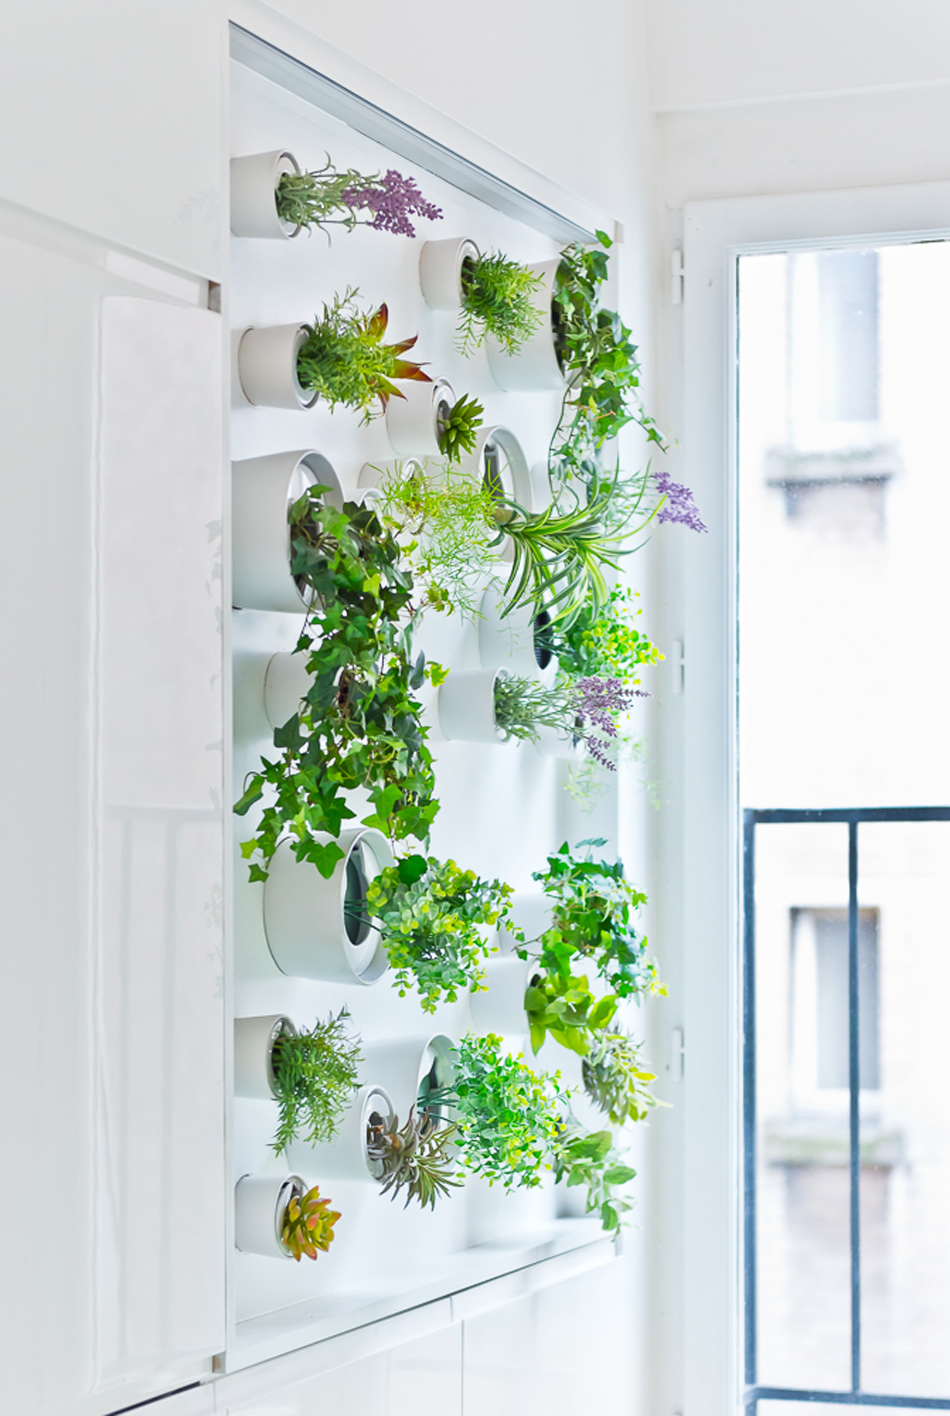 Vertical Garden Grows In This Parisian Apartment Of A Young Fashion Designer